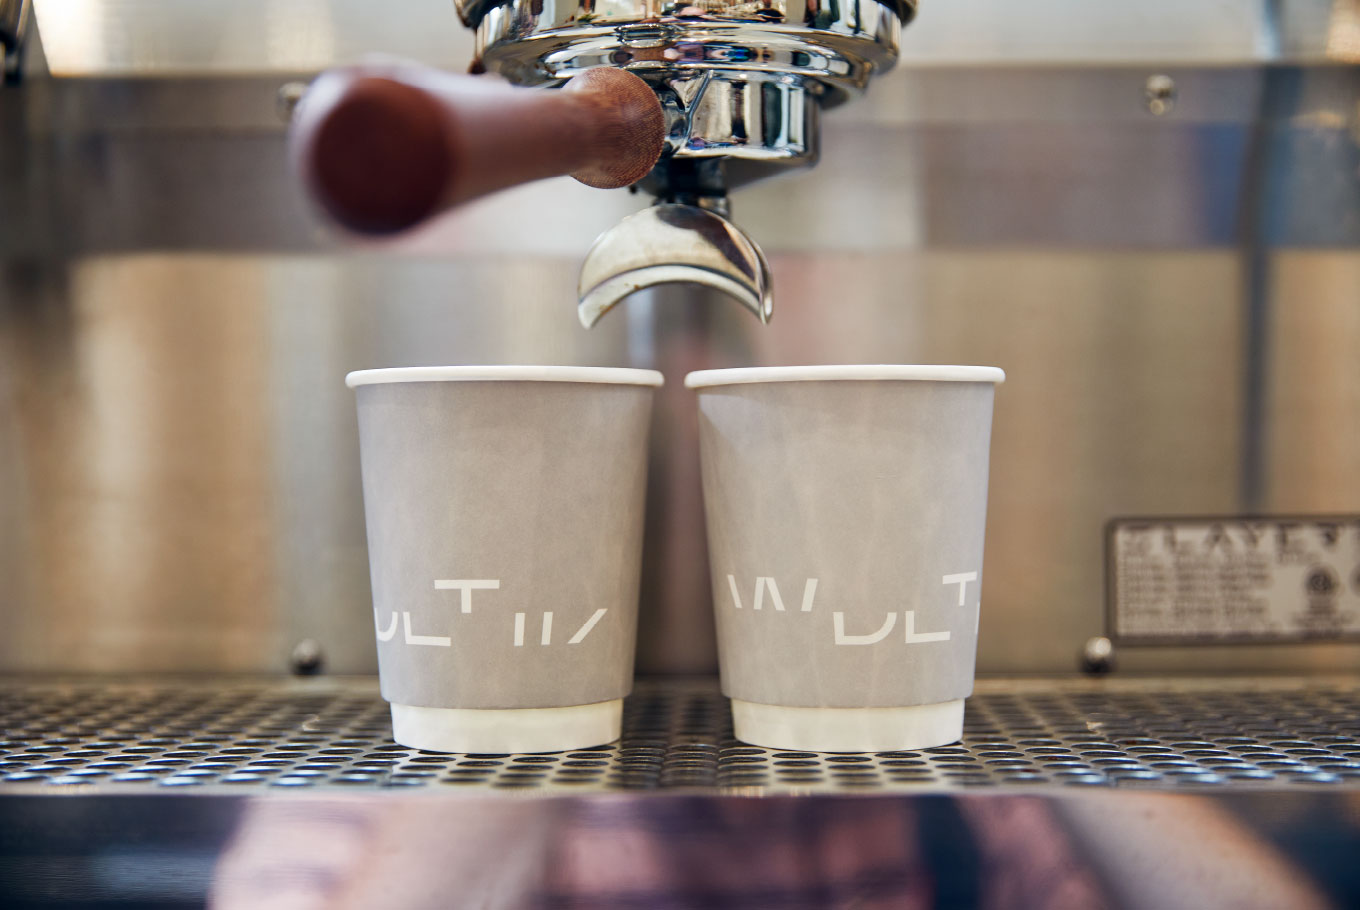 Coffee Cups with WDLT117 branding